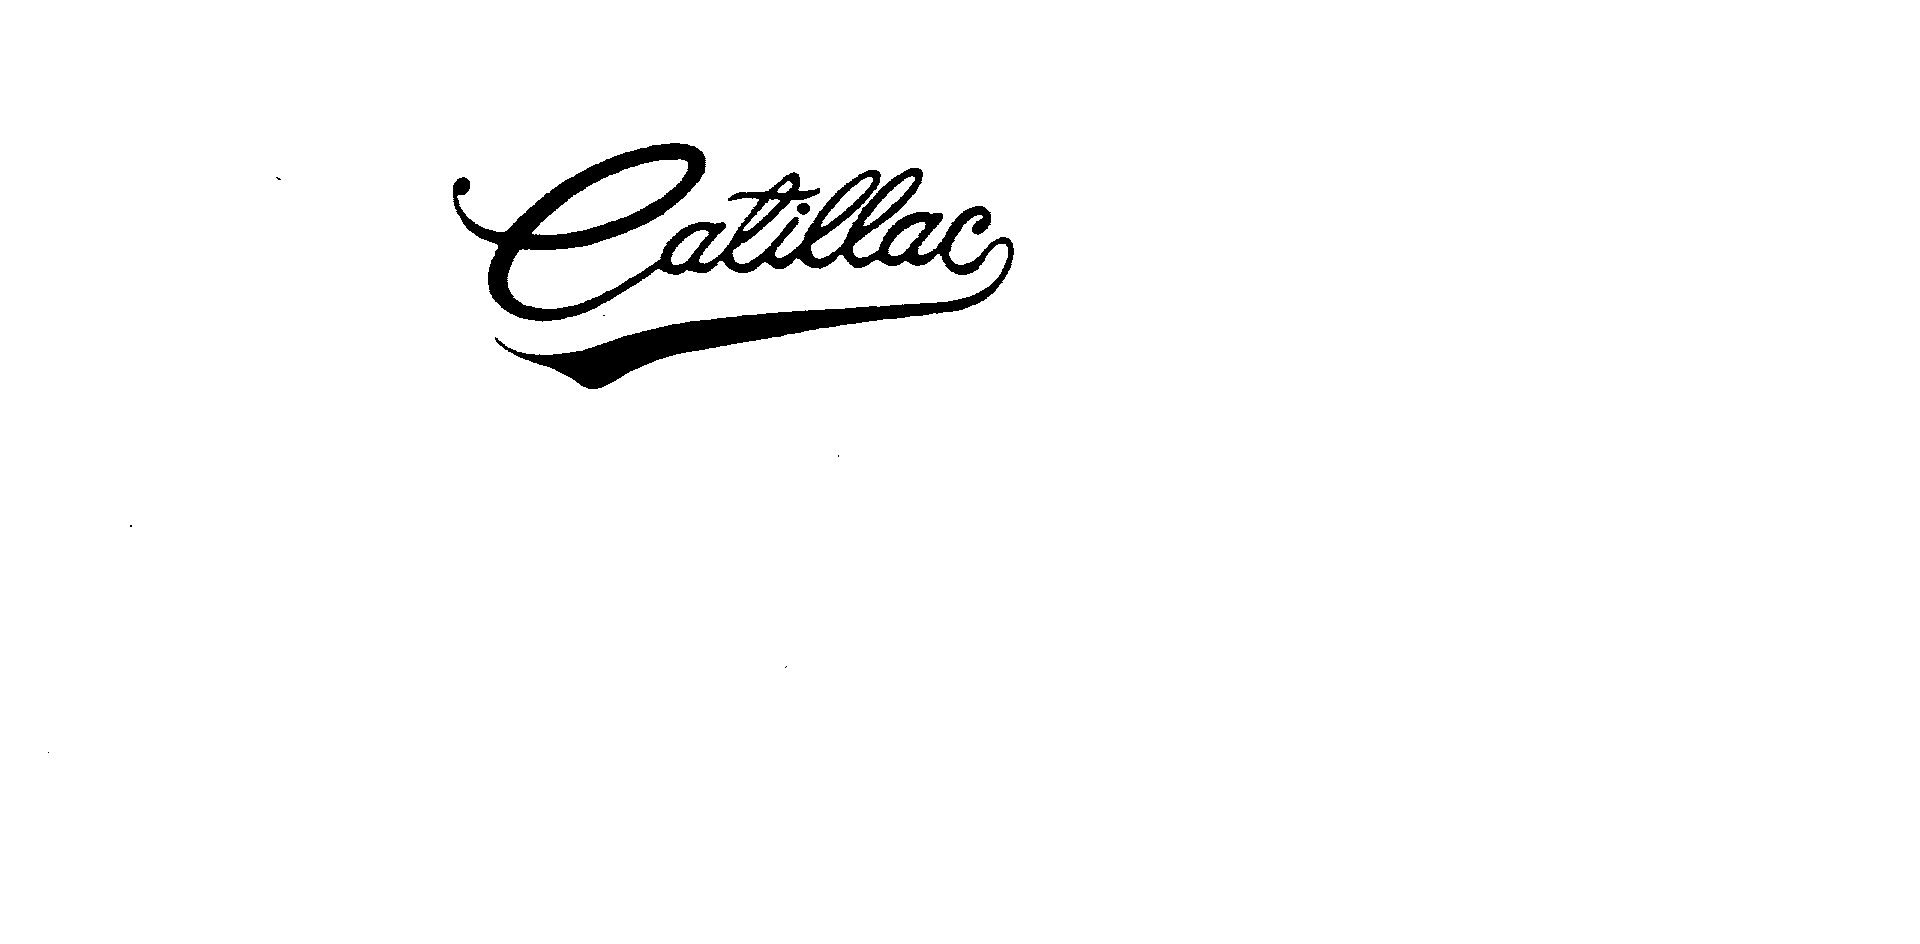  CATILLAC